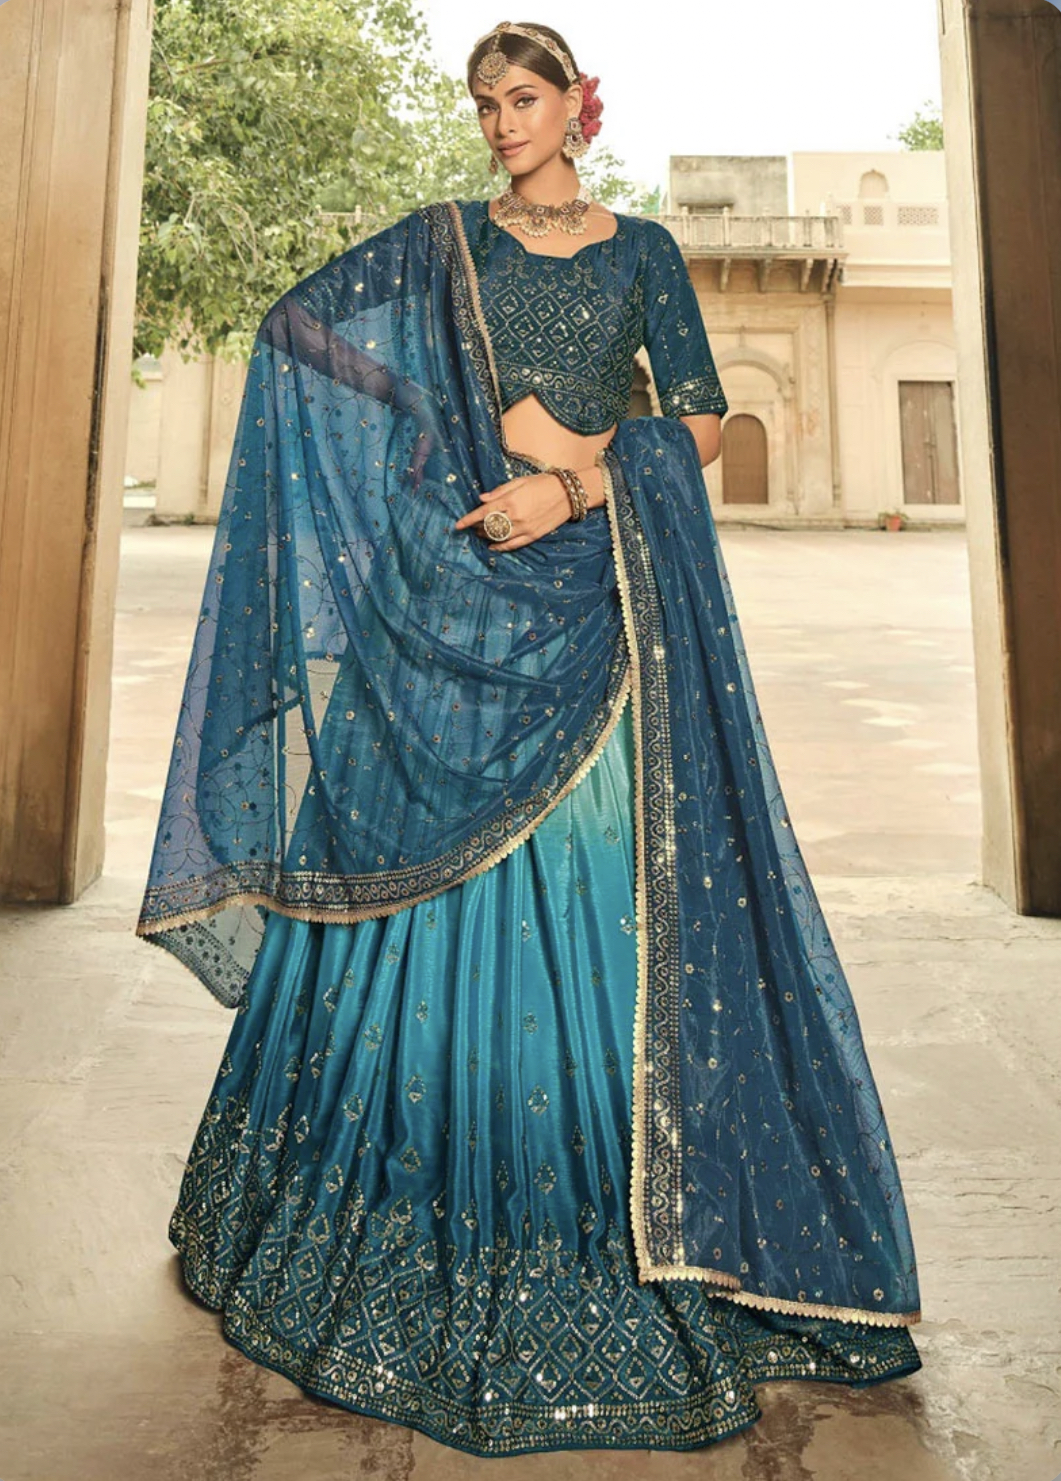 Teal Color Wedding Designer lehenga choli for Women - sethnik.com